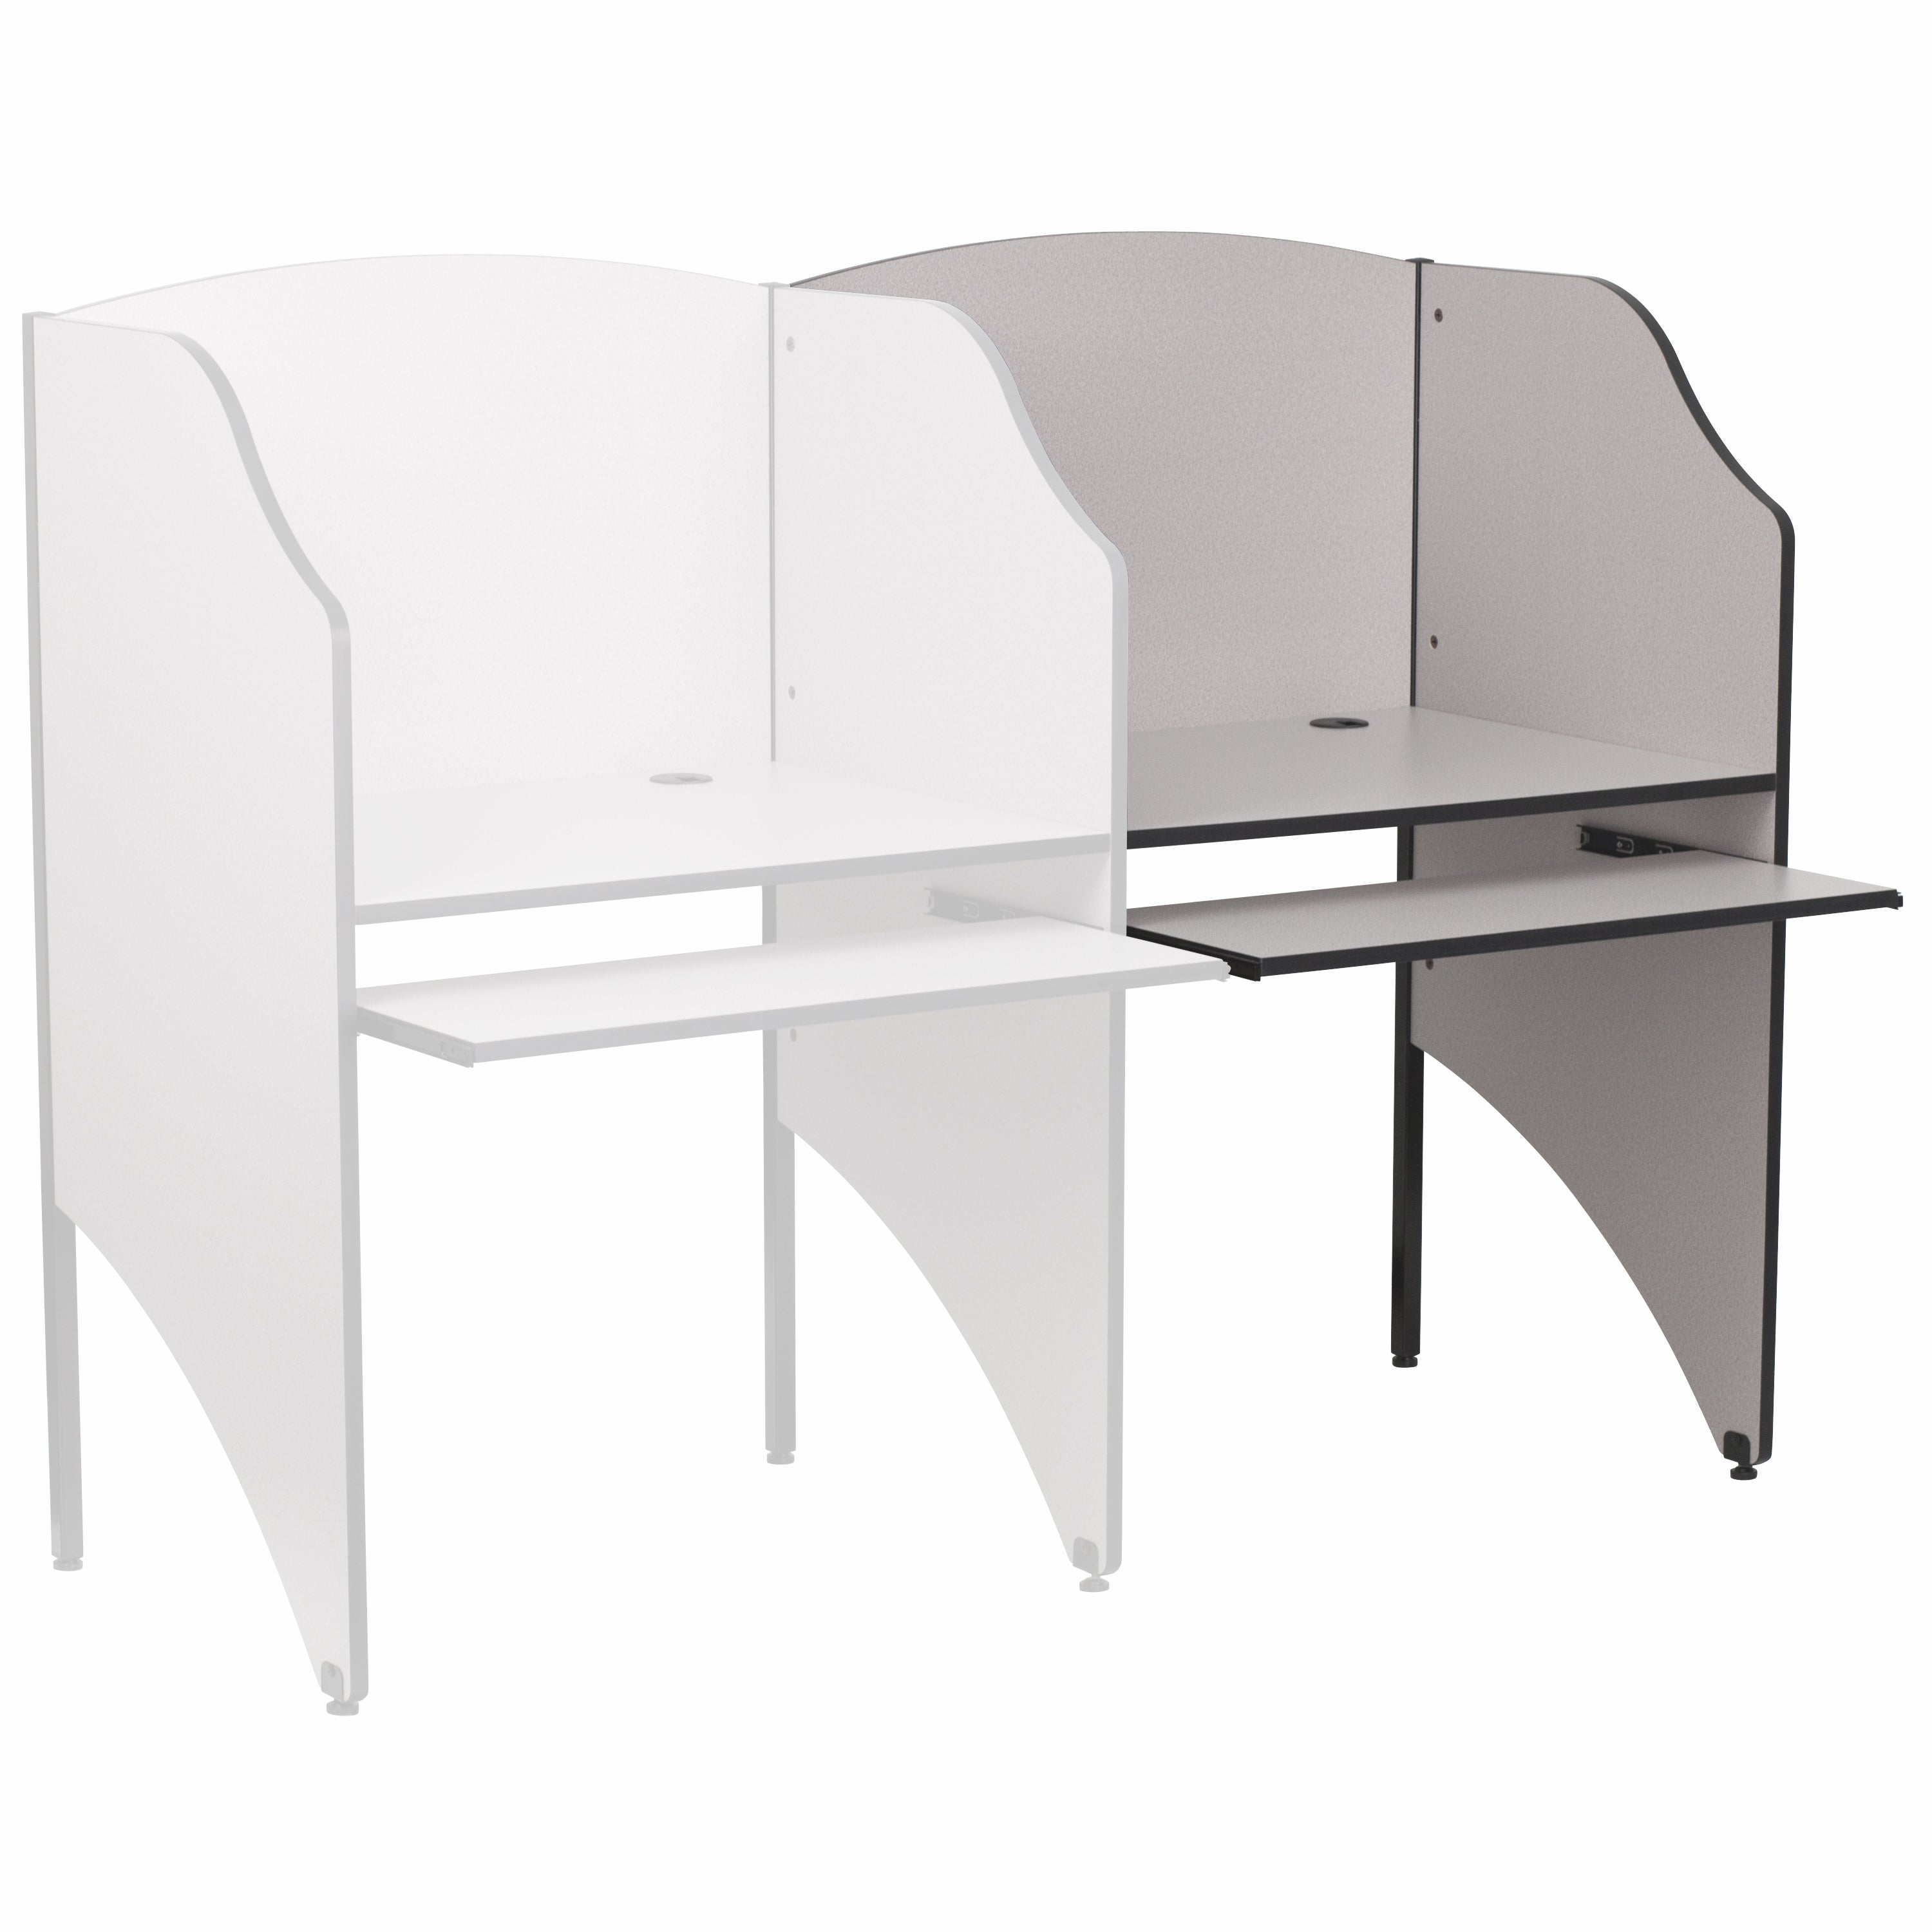 Add-On Study Carrel-Study Carrels-Flash Furniture-Wall2Wall Furnishings